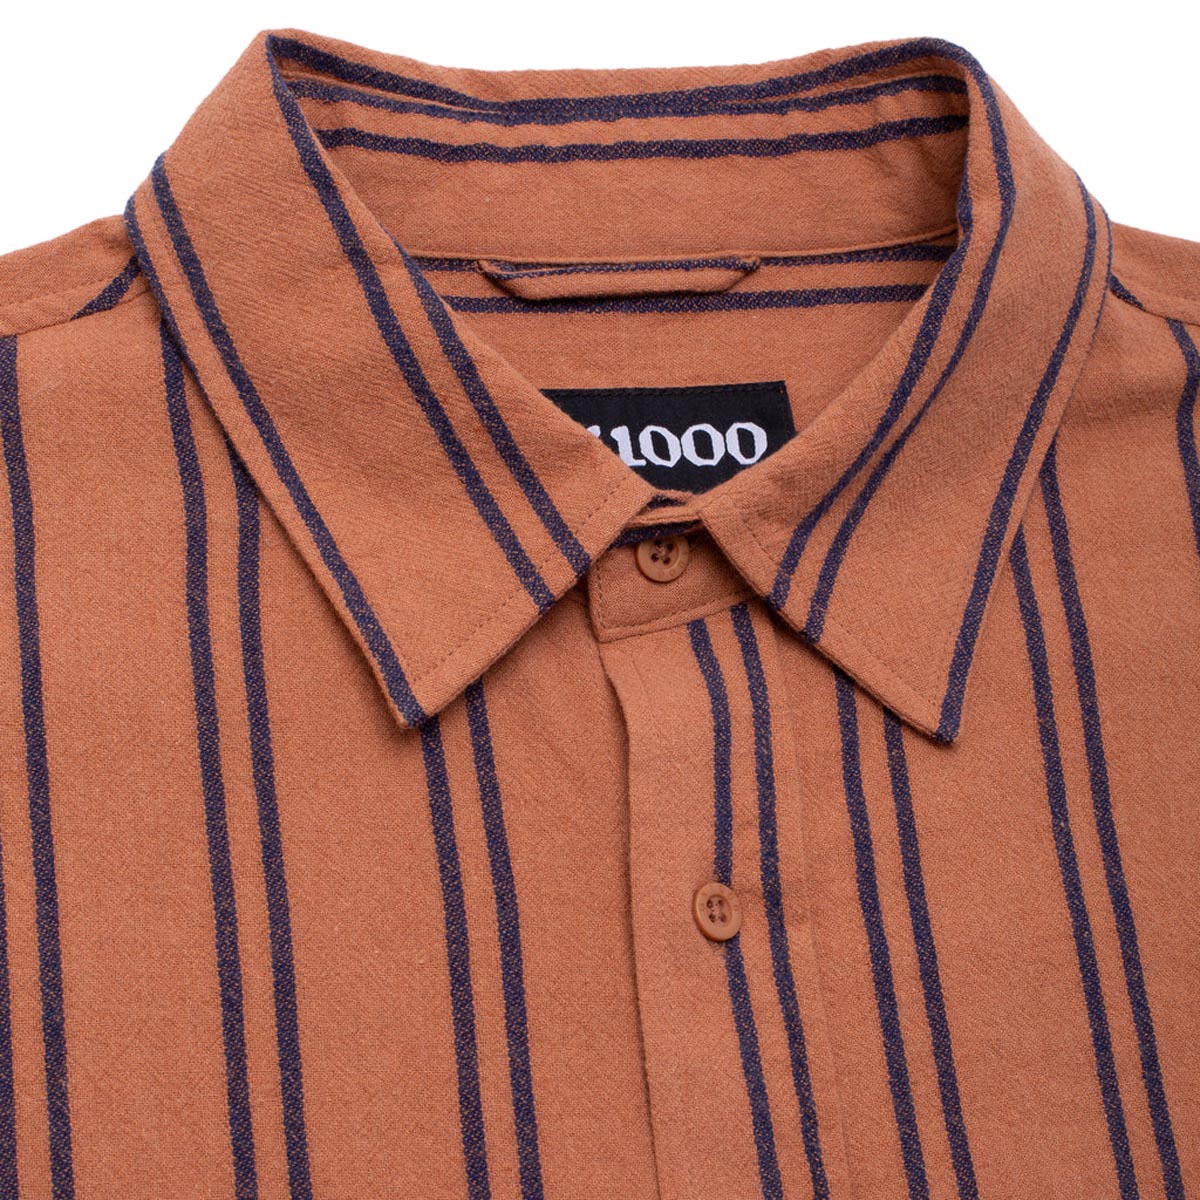 GX1000 Short Sleeve Button Down Shirt - Brown image 2